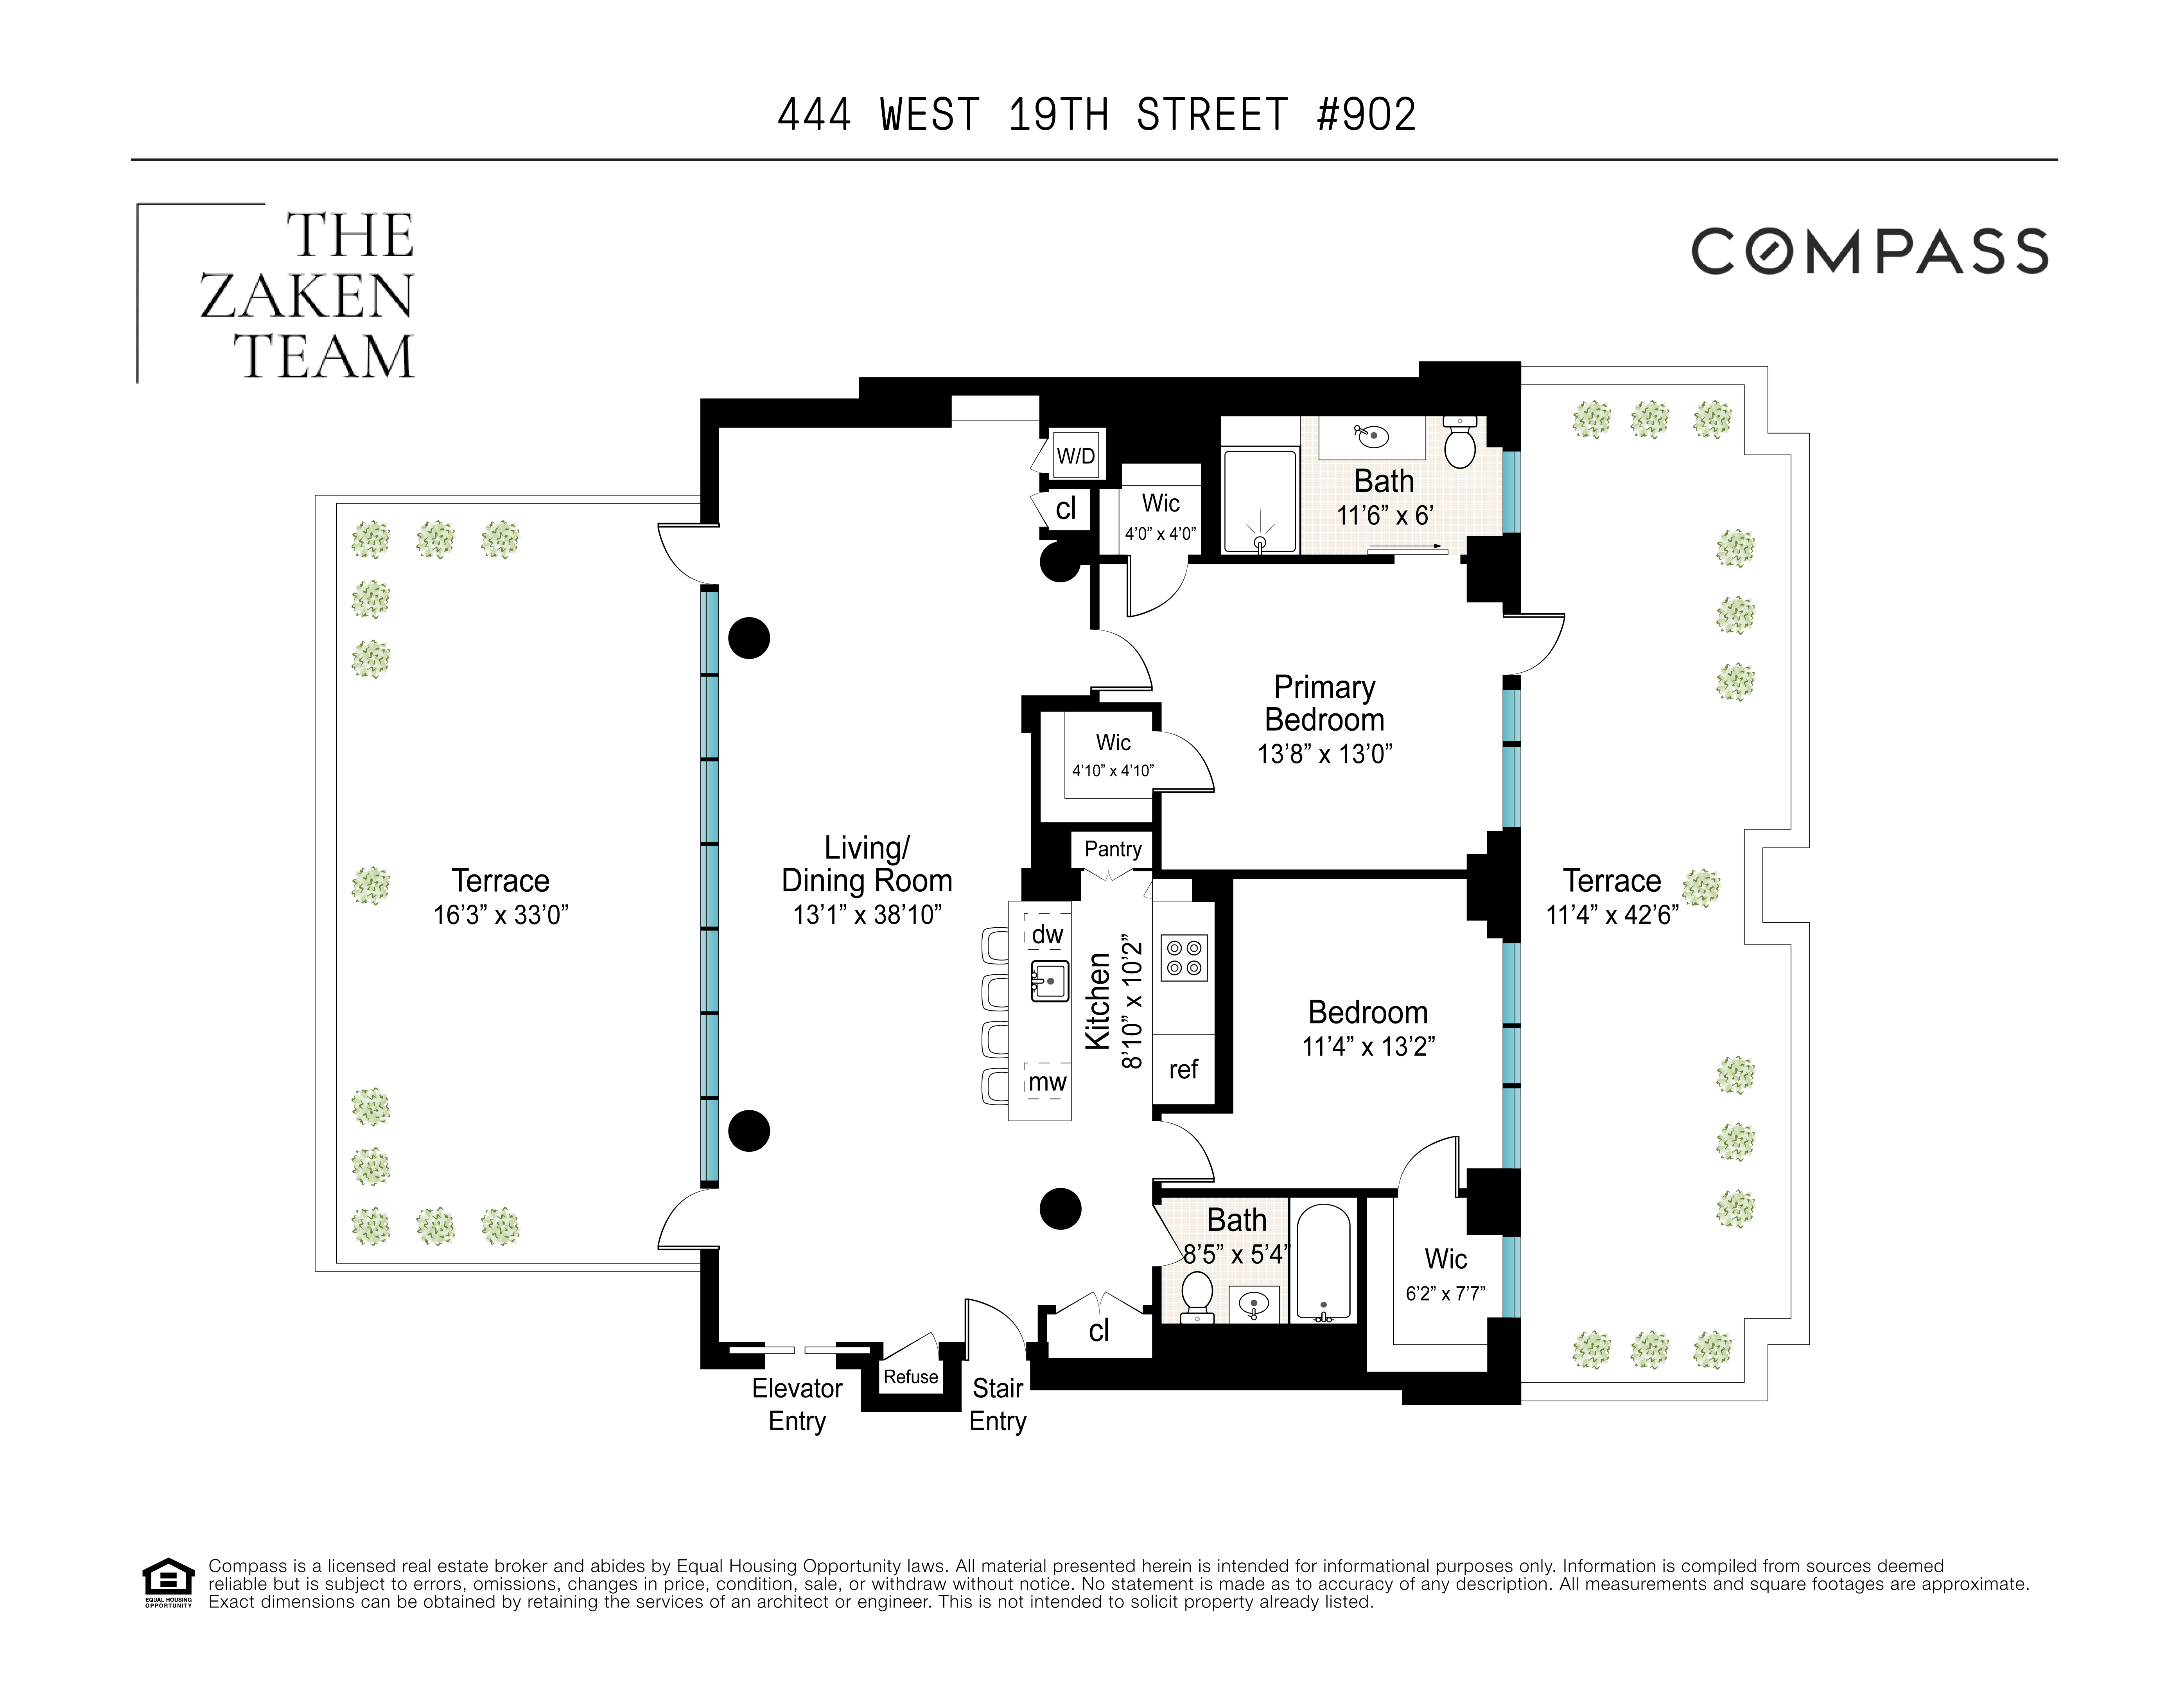 Floorplan for 444 West 19th Street, 902